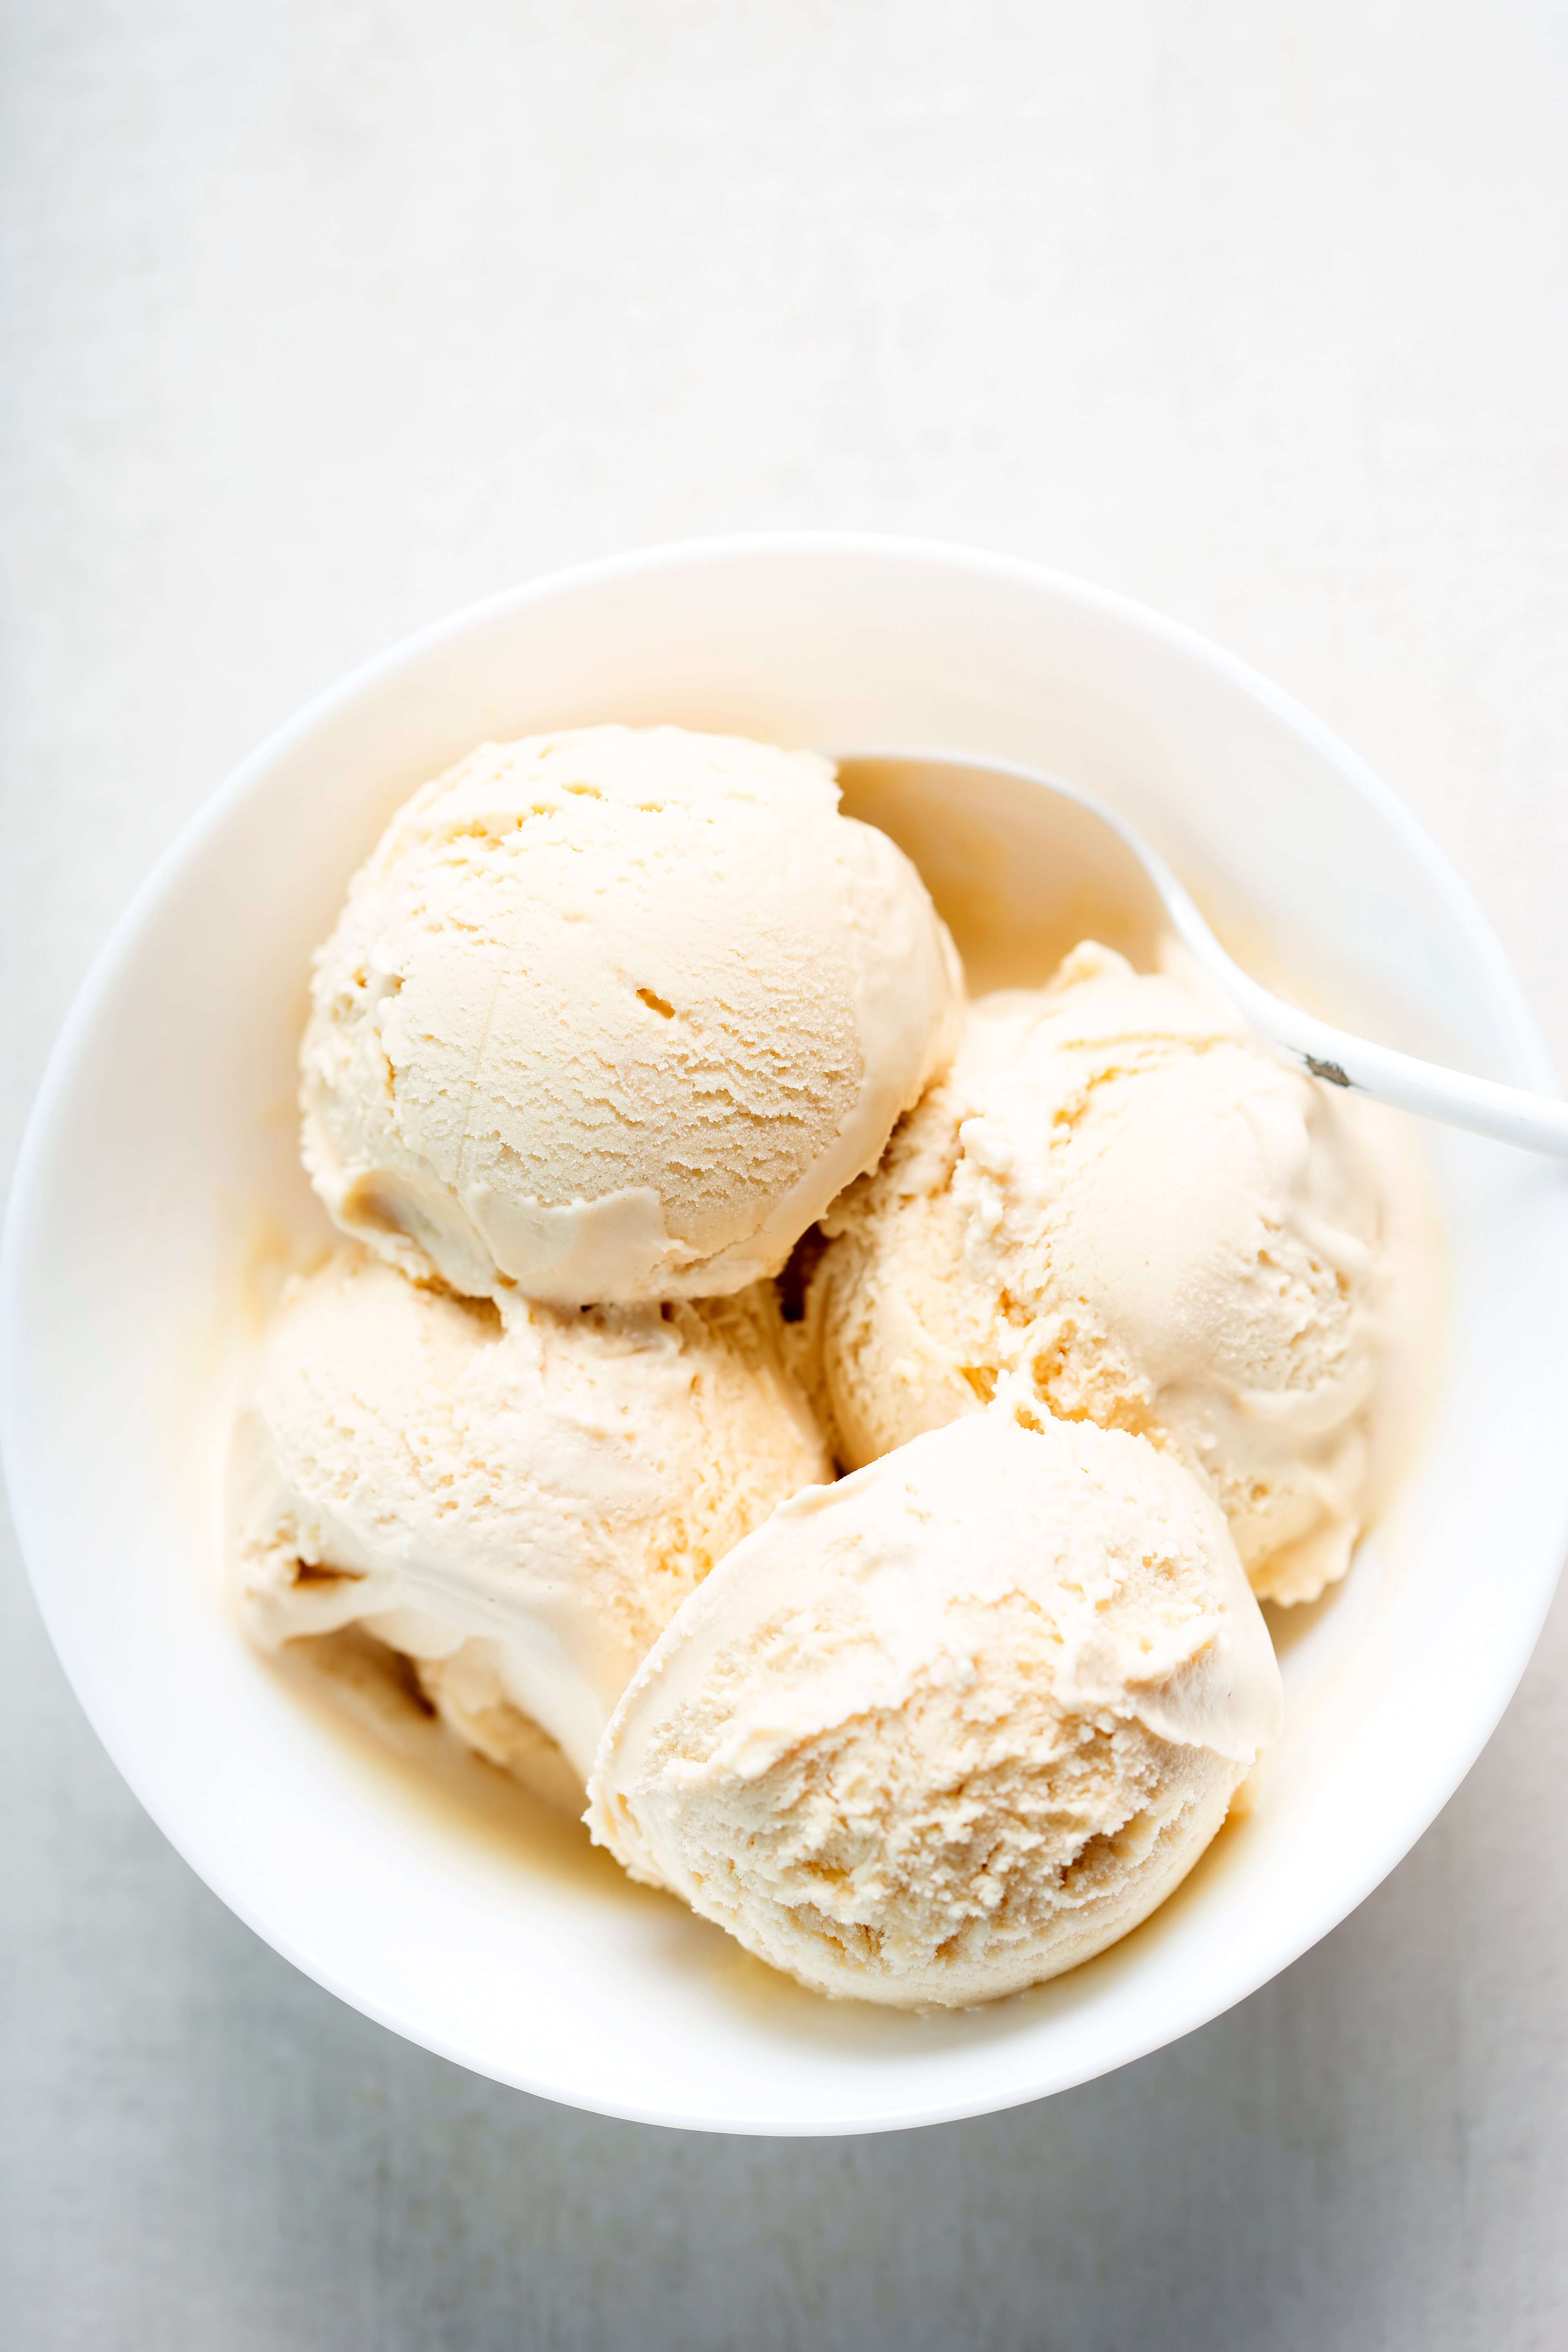 https://www.cuisinart.com/globalassets/simple-vanilla-ice-cream.jpg